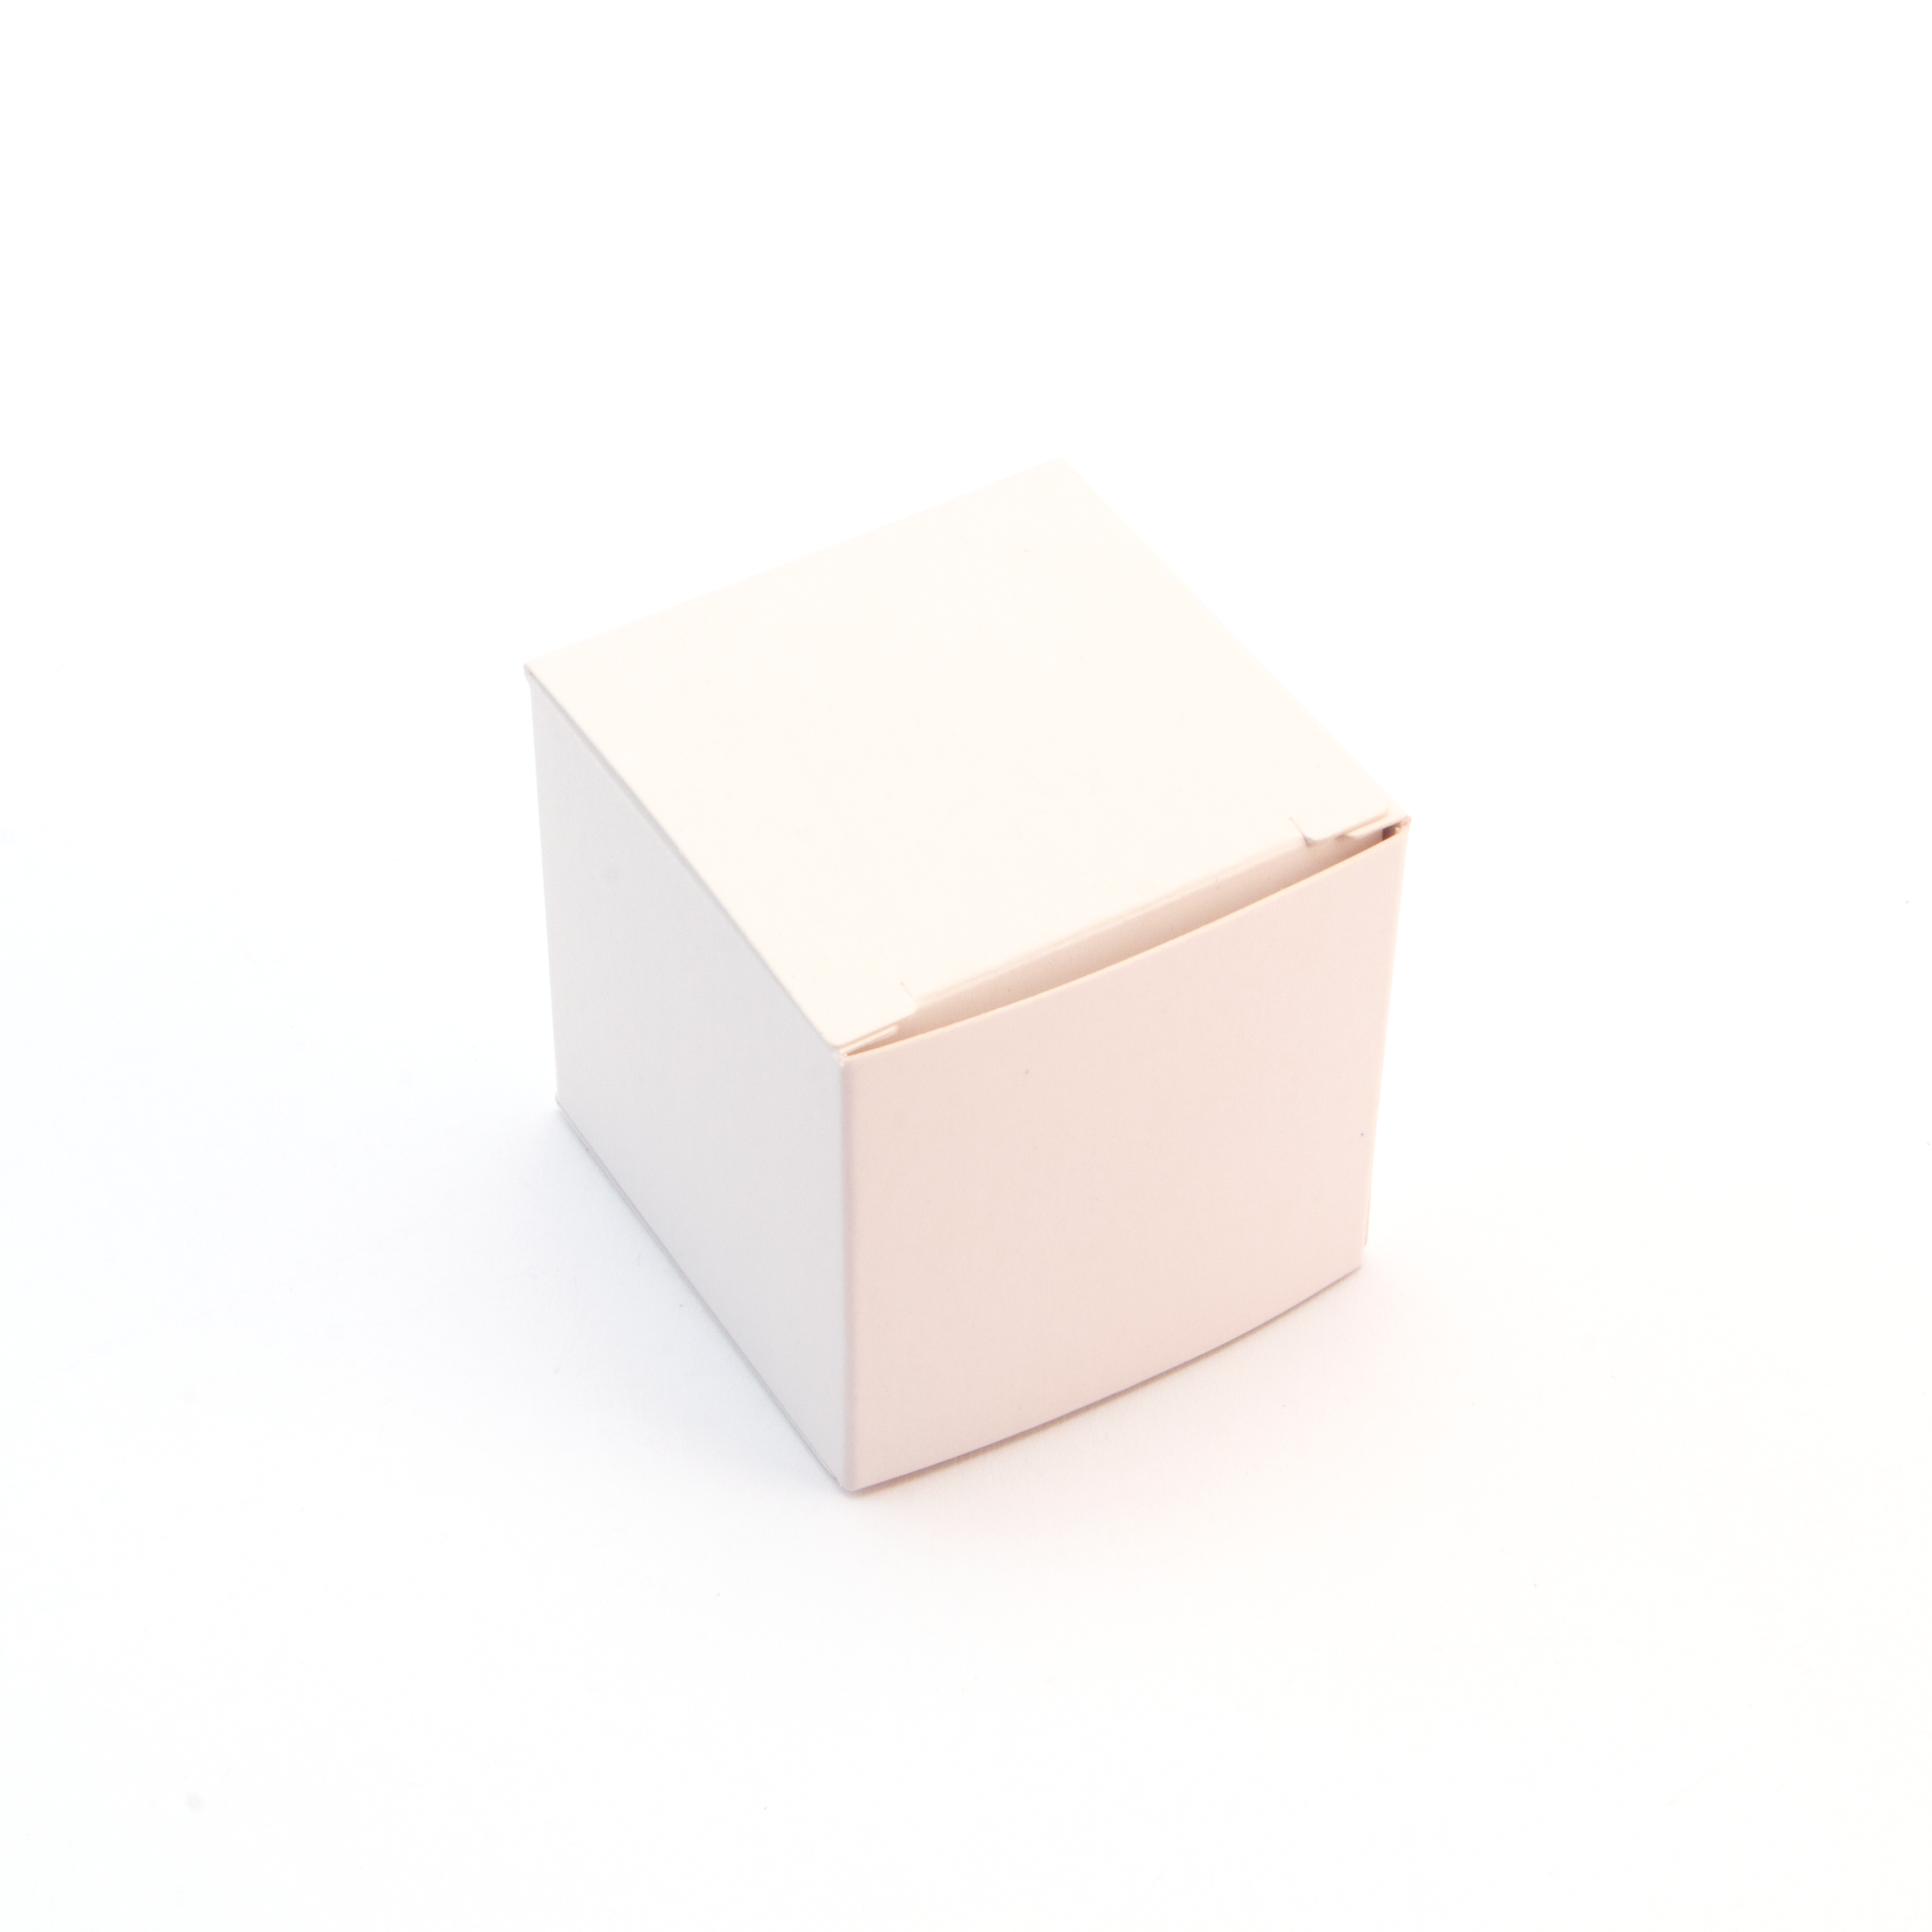 Easter – Eco Maxi Cube - Dark Salted Caramel - Chocolate Truffles